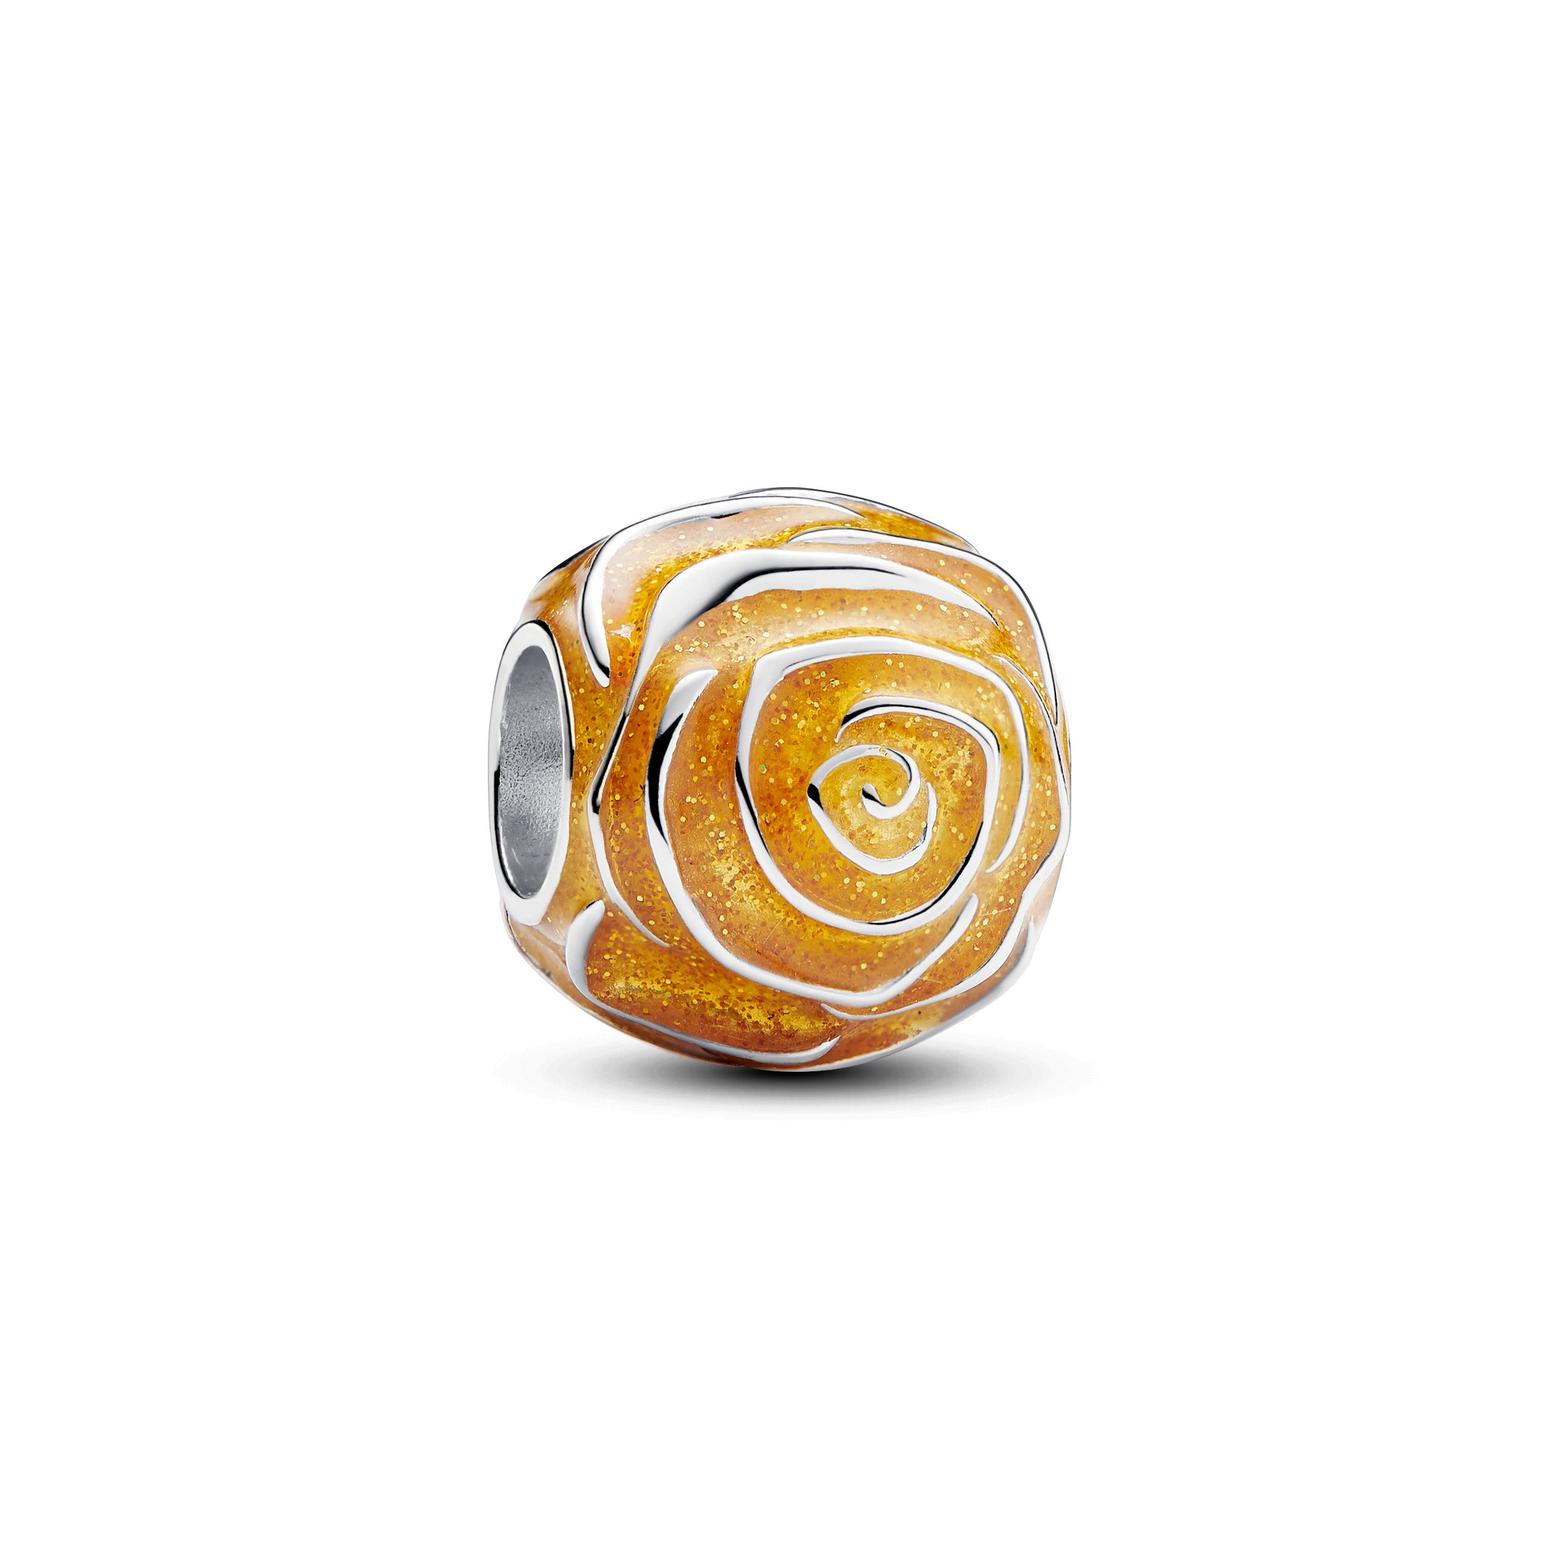 Pandora - Yellow Rose in Bloom charm - Sølv på tilbud til 399 kr. hos Vibholm Guld & Sølv